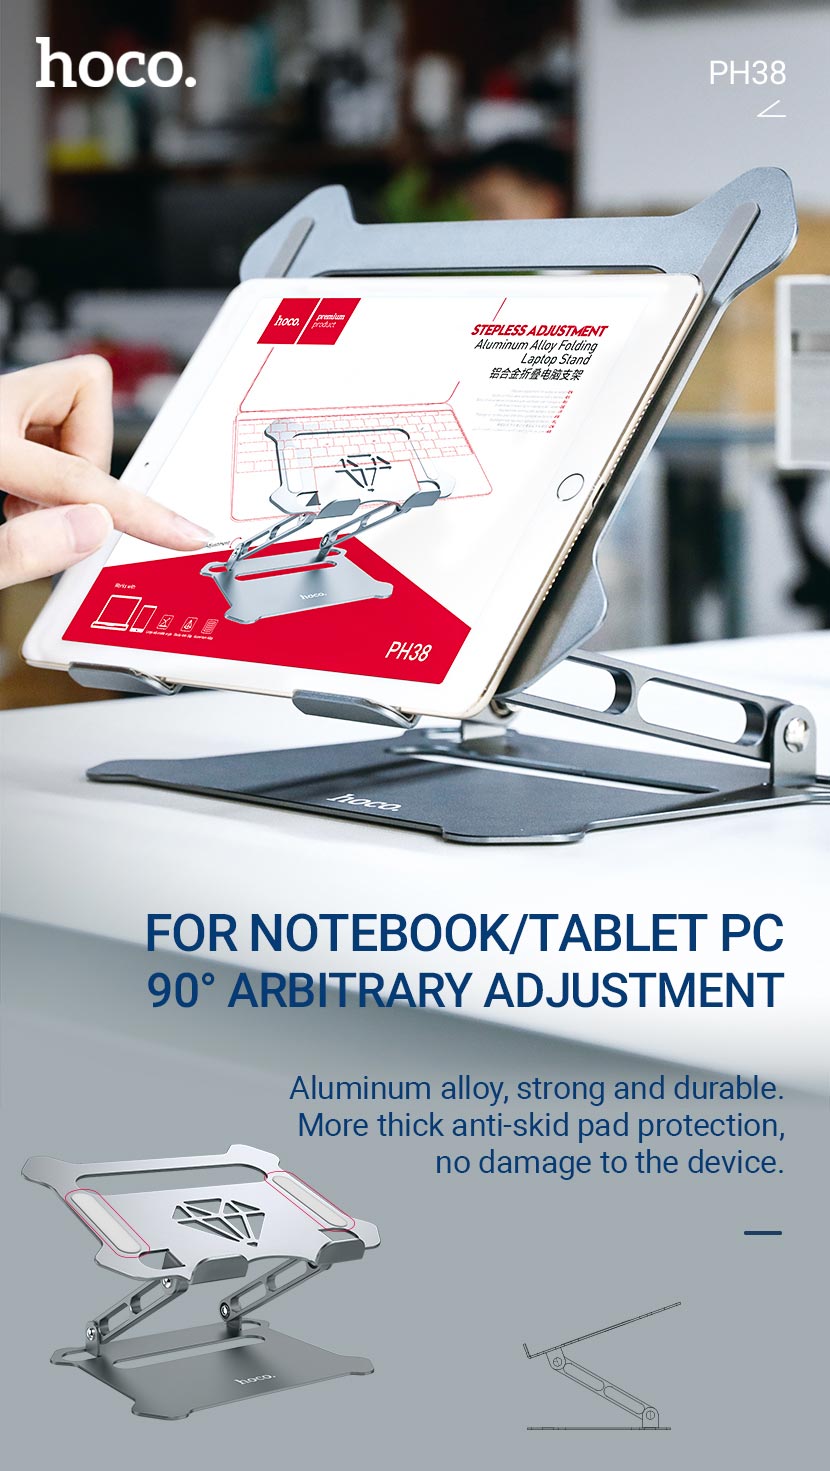 hoco ph38 diamond aluminum alloy folding laptop stand adjustment en